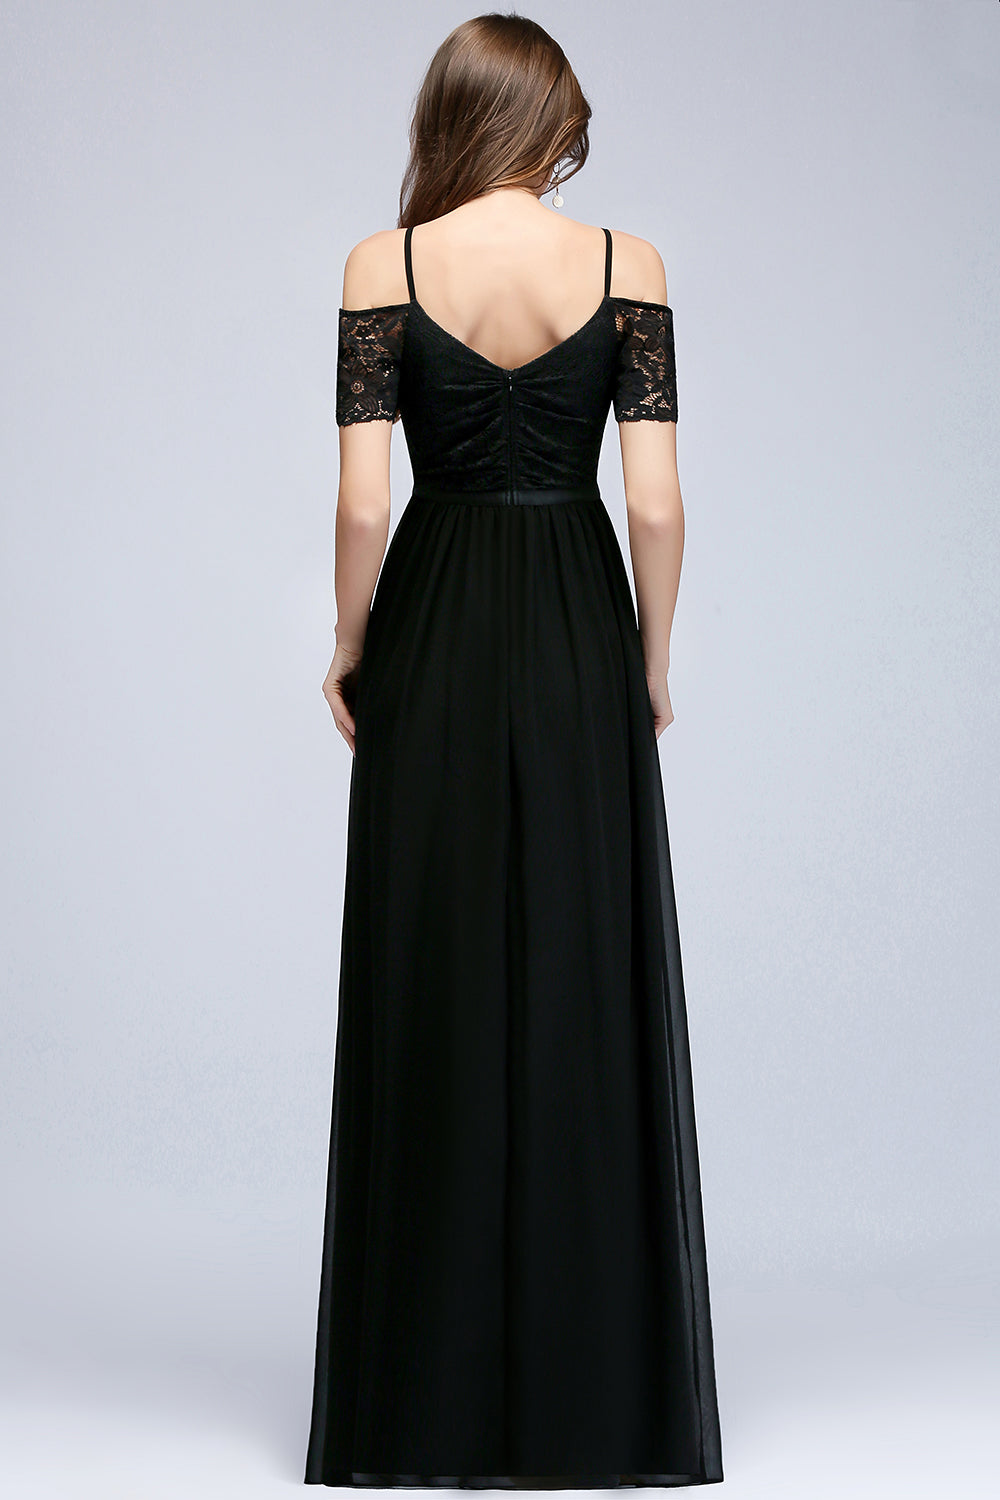 Affordable Off-the-shoulder Black Lace Bridesmaid Dress Online-27dress